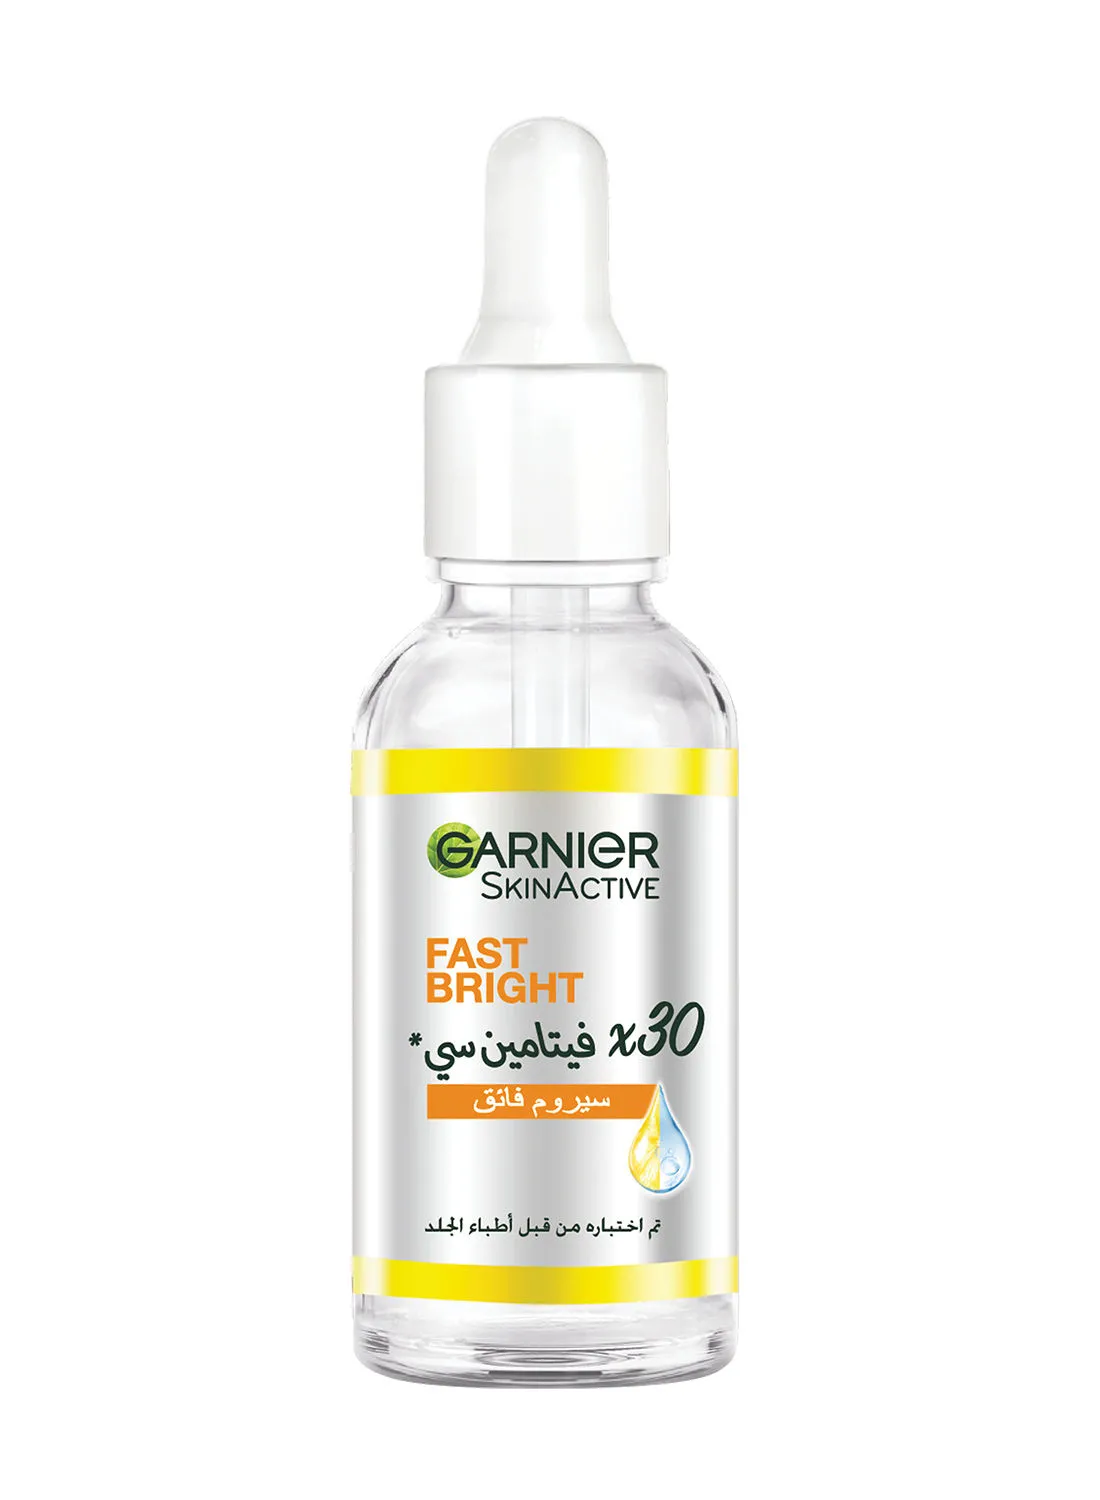 GARNIER SkinActive Fast Bright 30x Vitamin C & Niacinamide Anti Dark Spot Serum 30ml